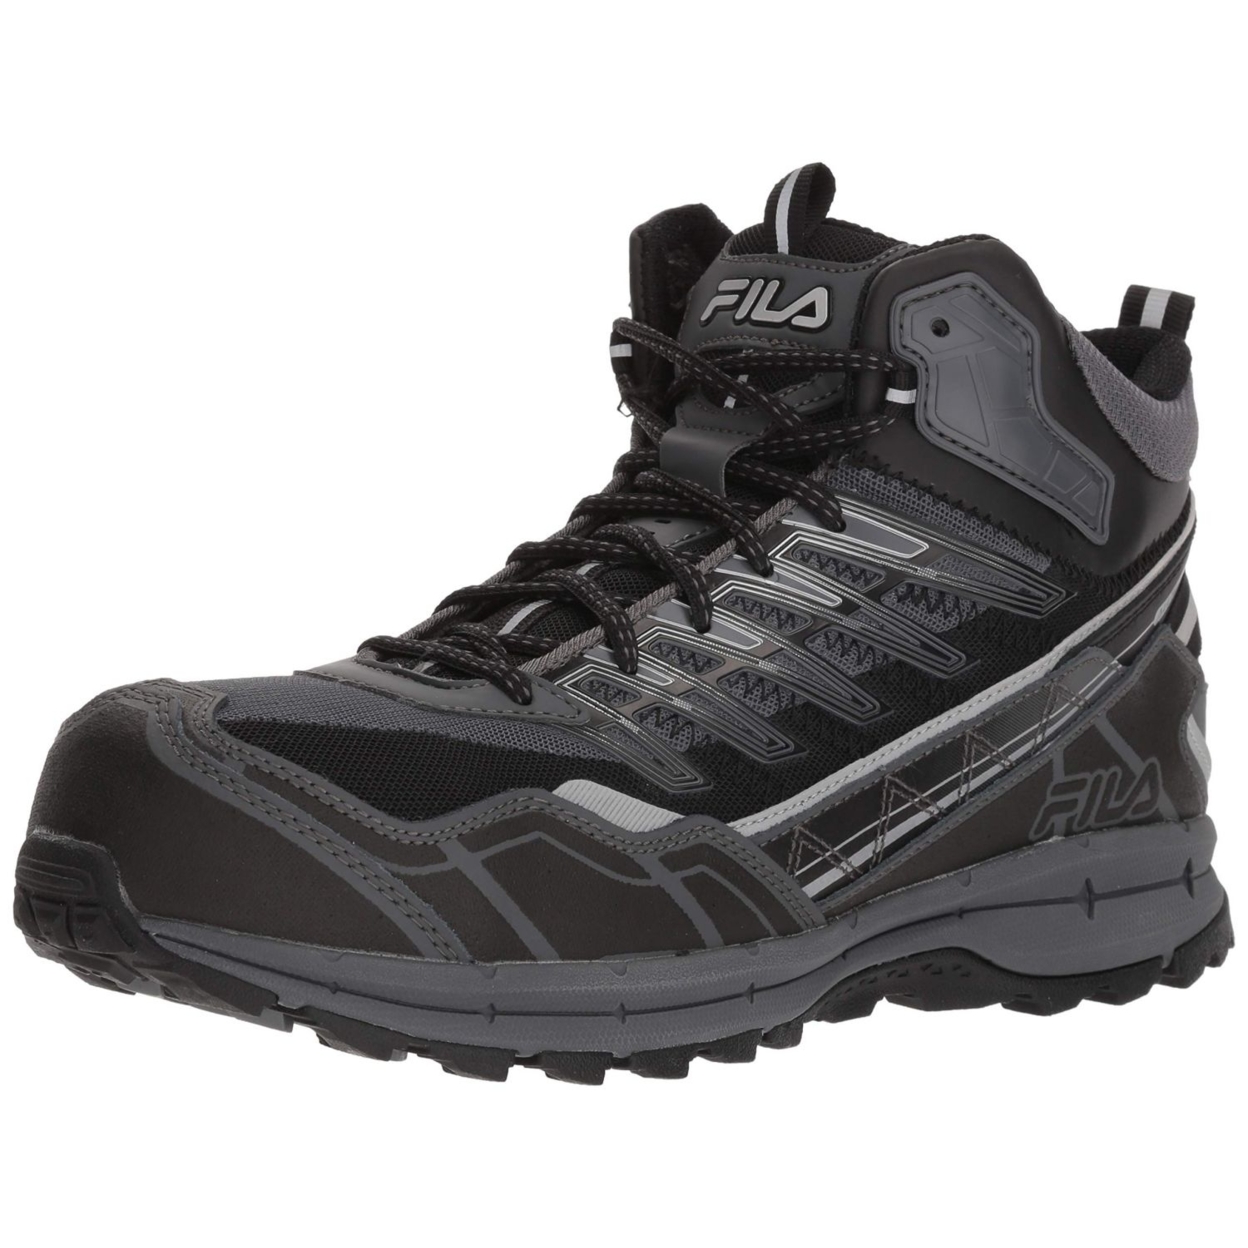 Fila Men's Hail Storm 3 Mid Composite Toe Trail Work Shoes Ct CSRK/BLK/MSIL - CSRK/BLK/MSIL, 8.5